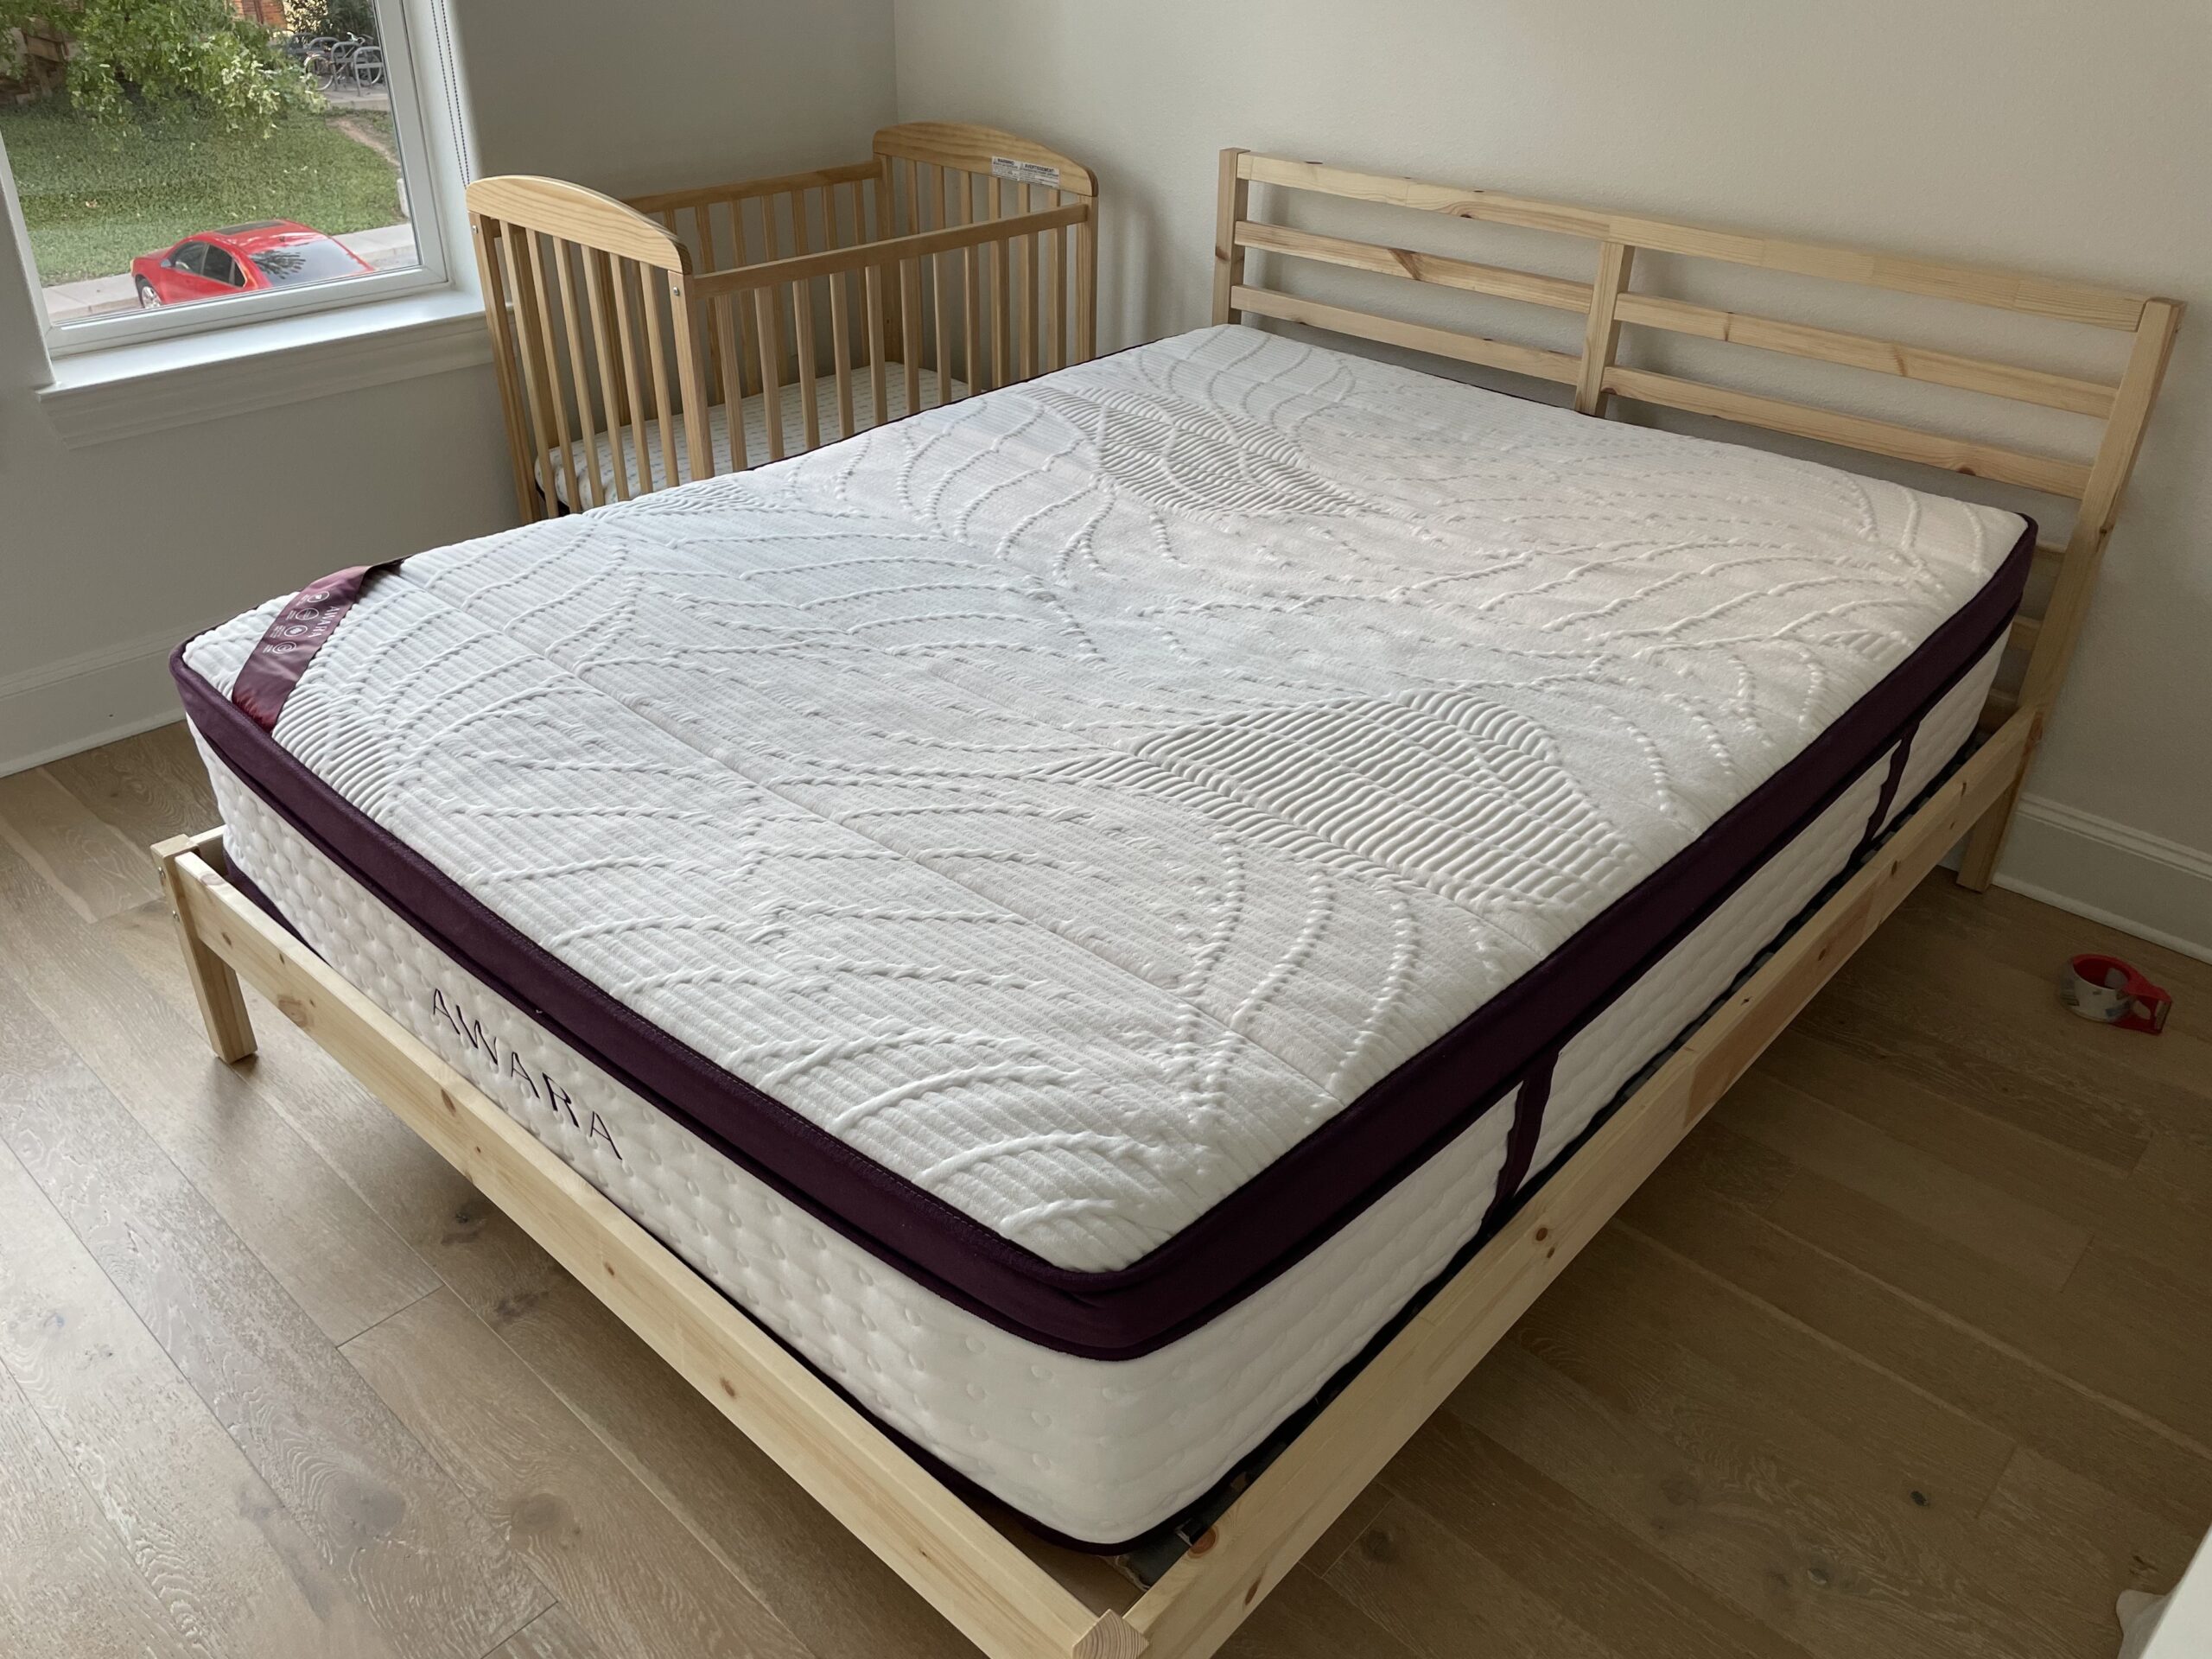 awara premier natural hybrid mattress review